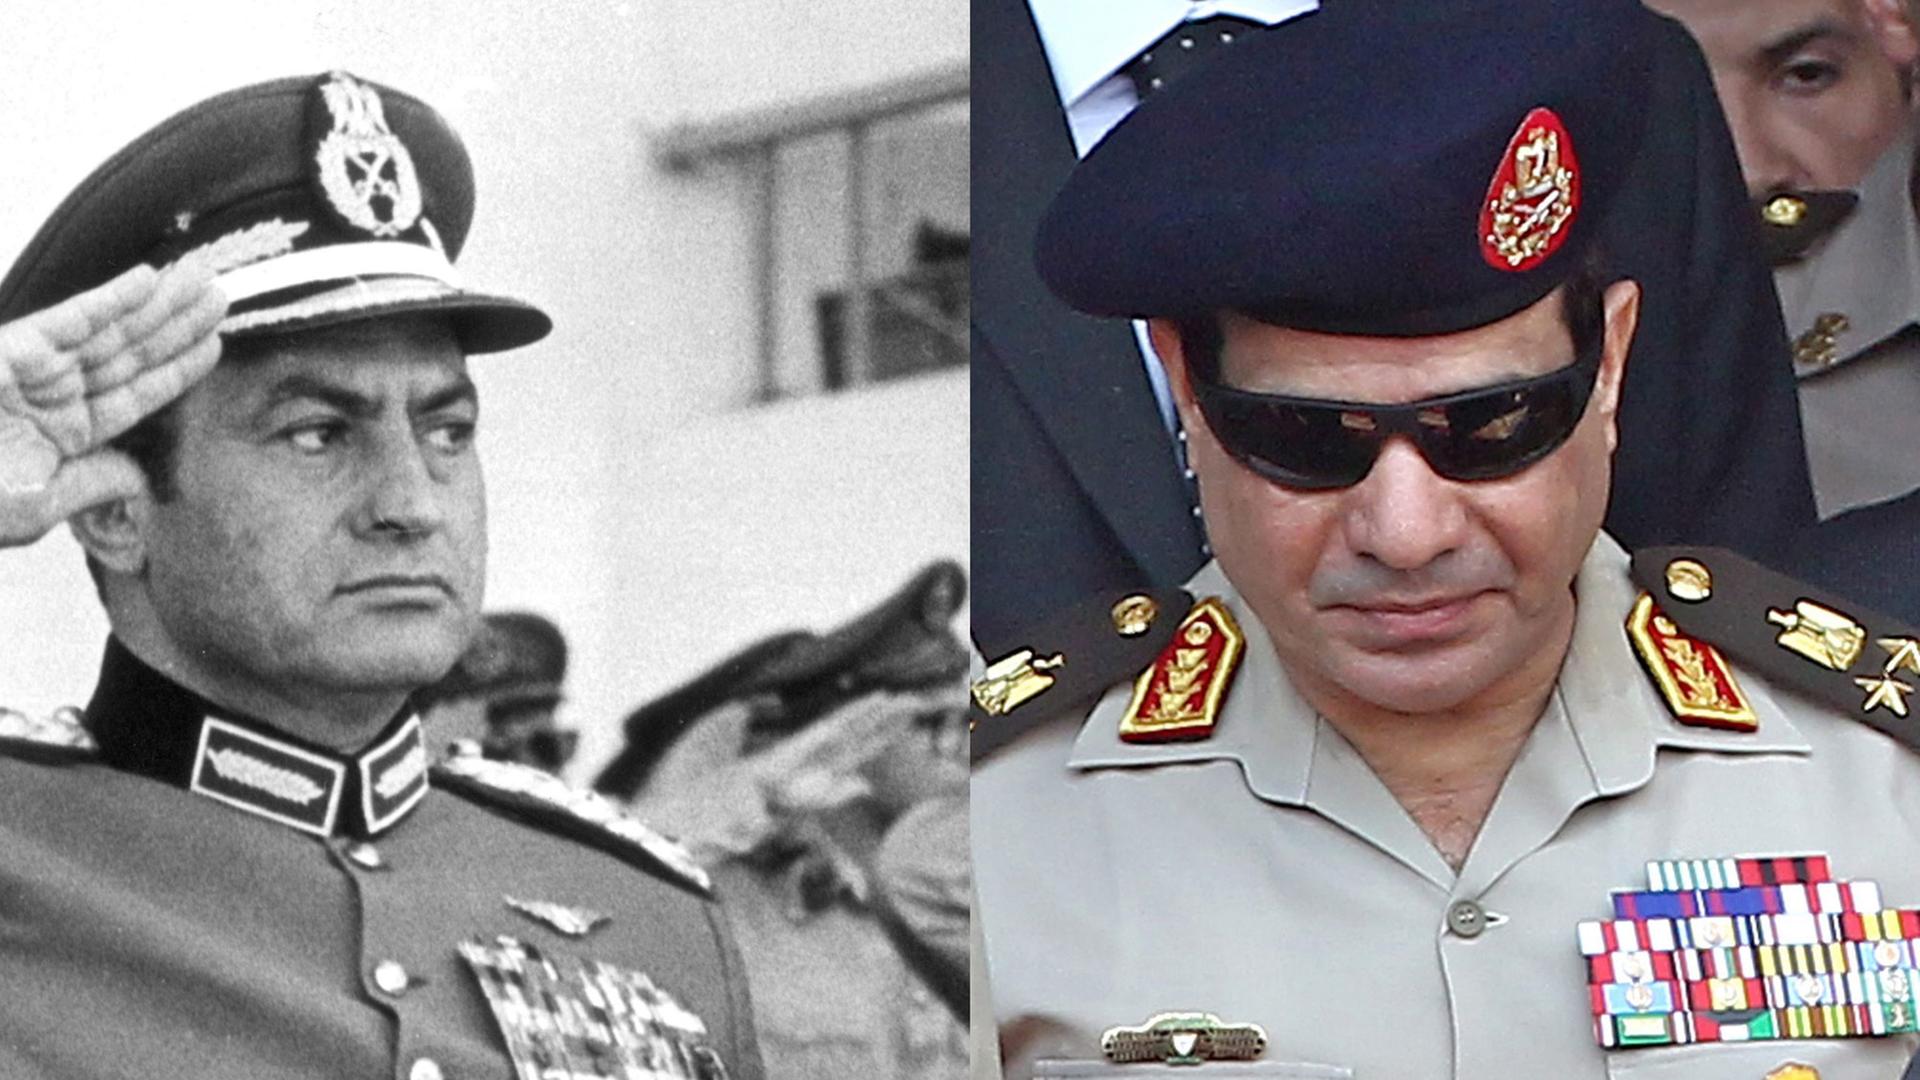 Mubarak 1981 in Uniform und al-Sisi 2014 in Uniform.